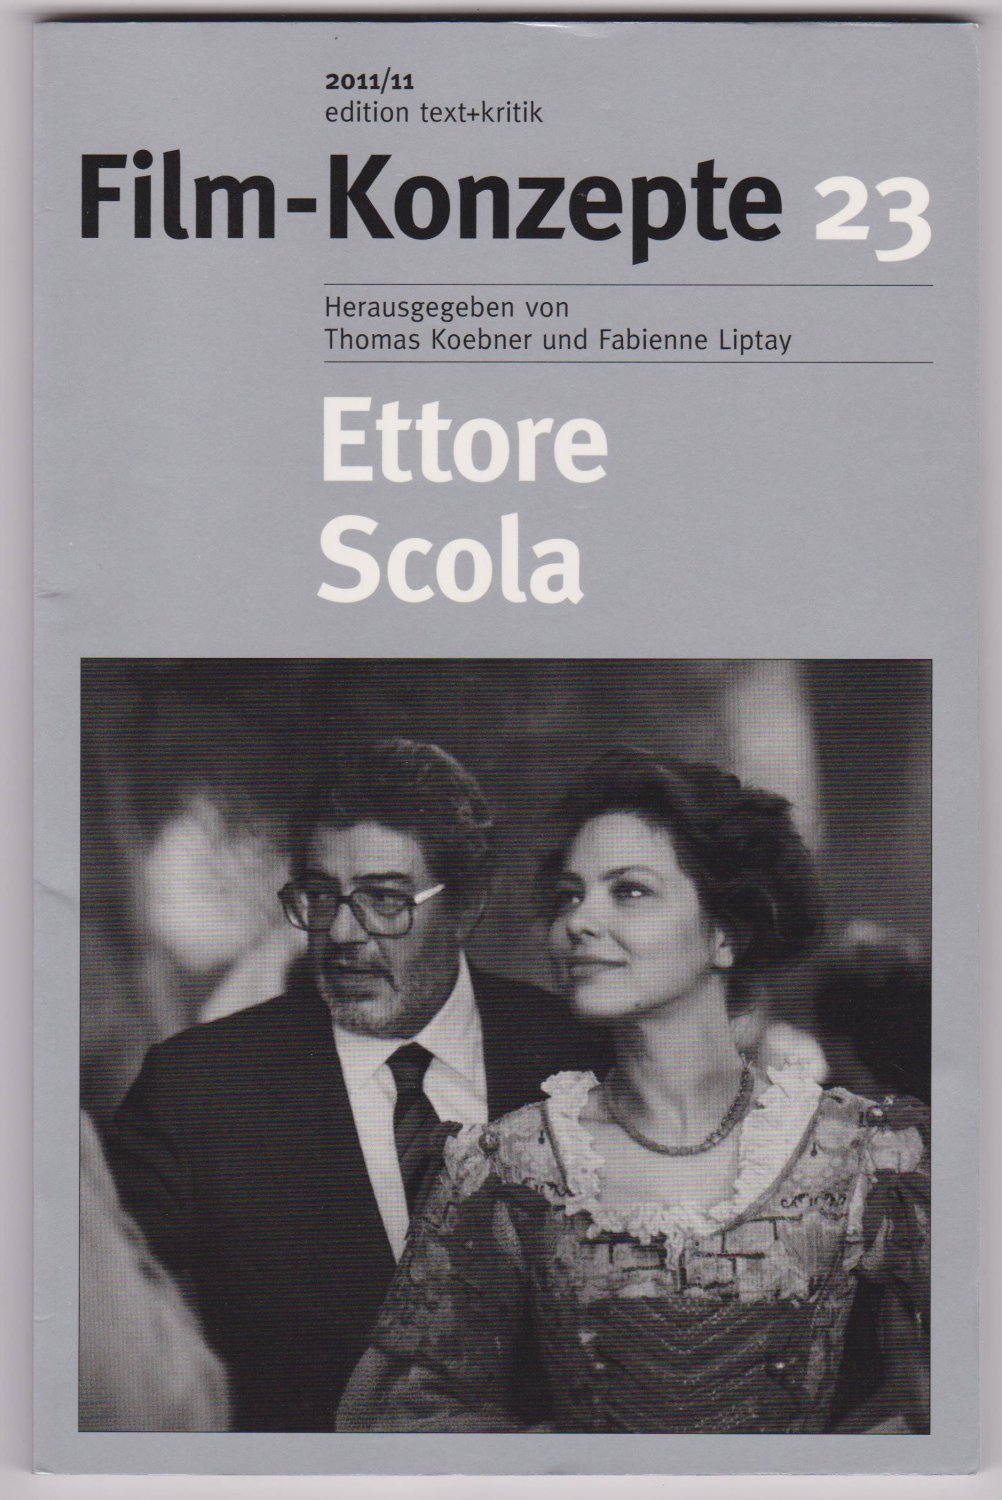 BUOVOLO, Marisa (Herausgeberin):  Film-Konzepte 23. Ettore Scola. 